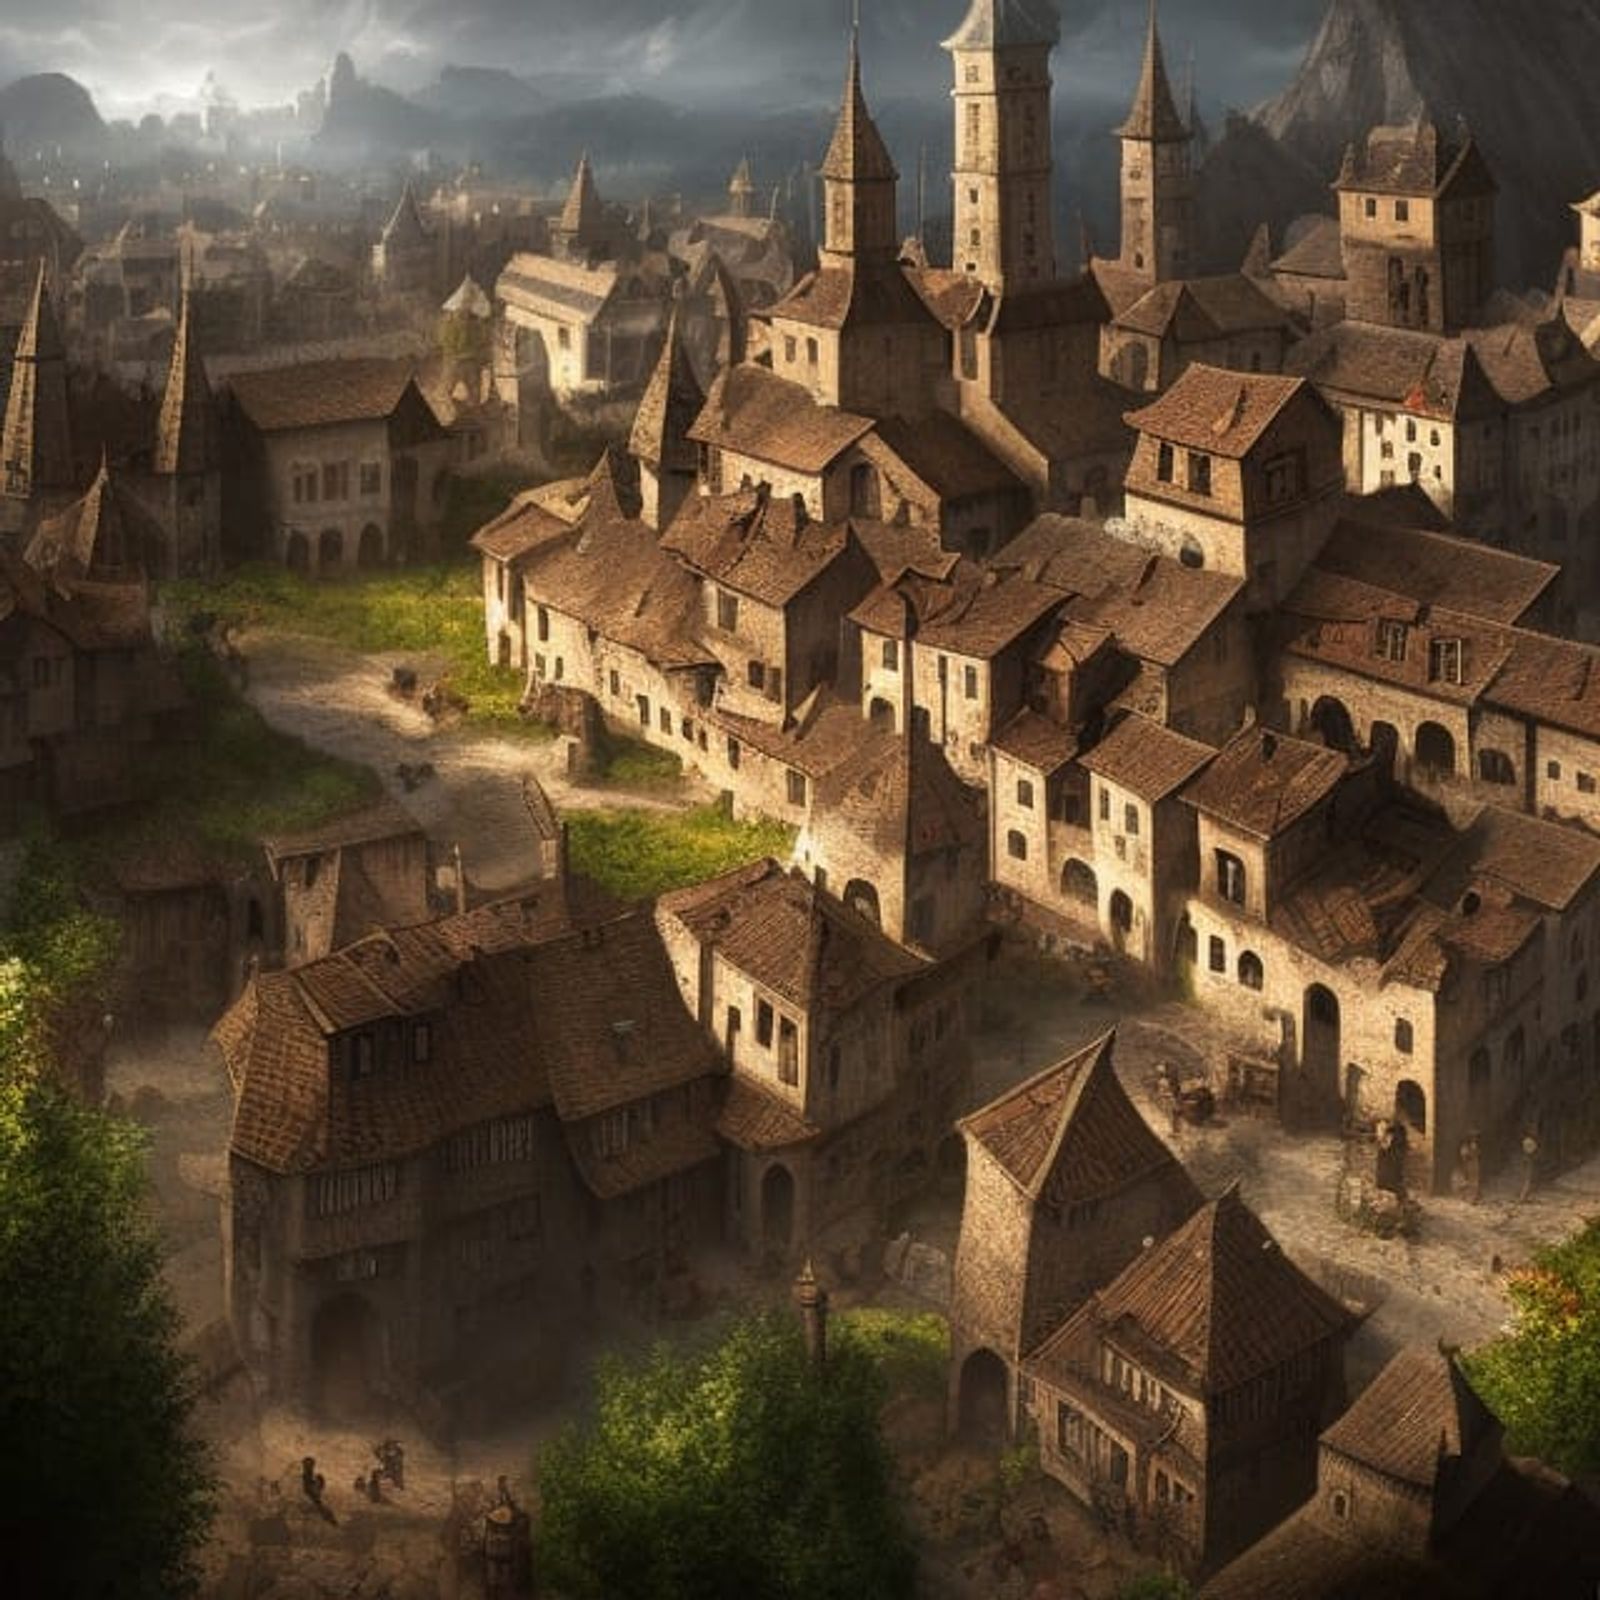 medieval town concept art